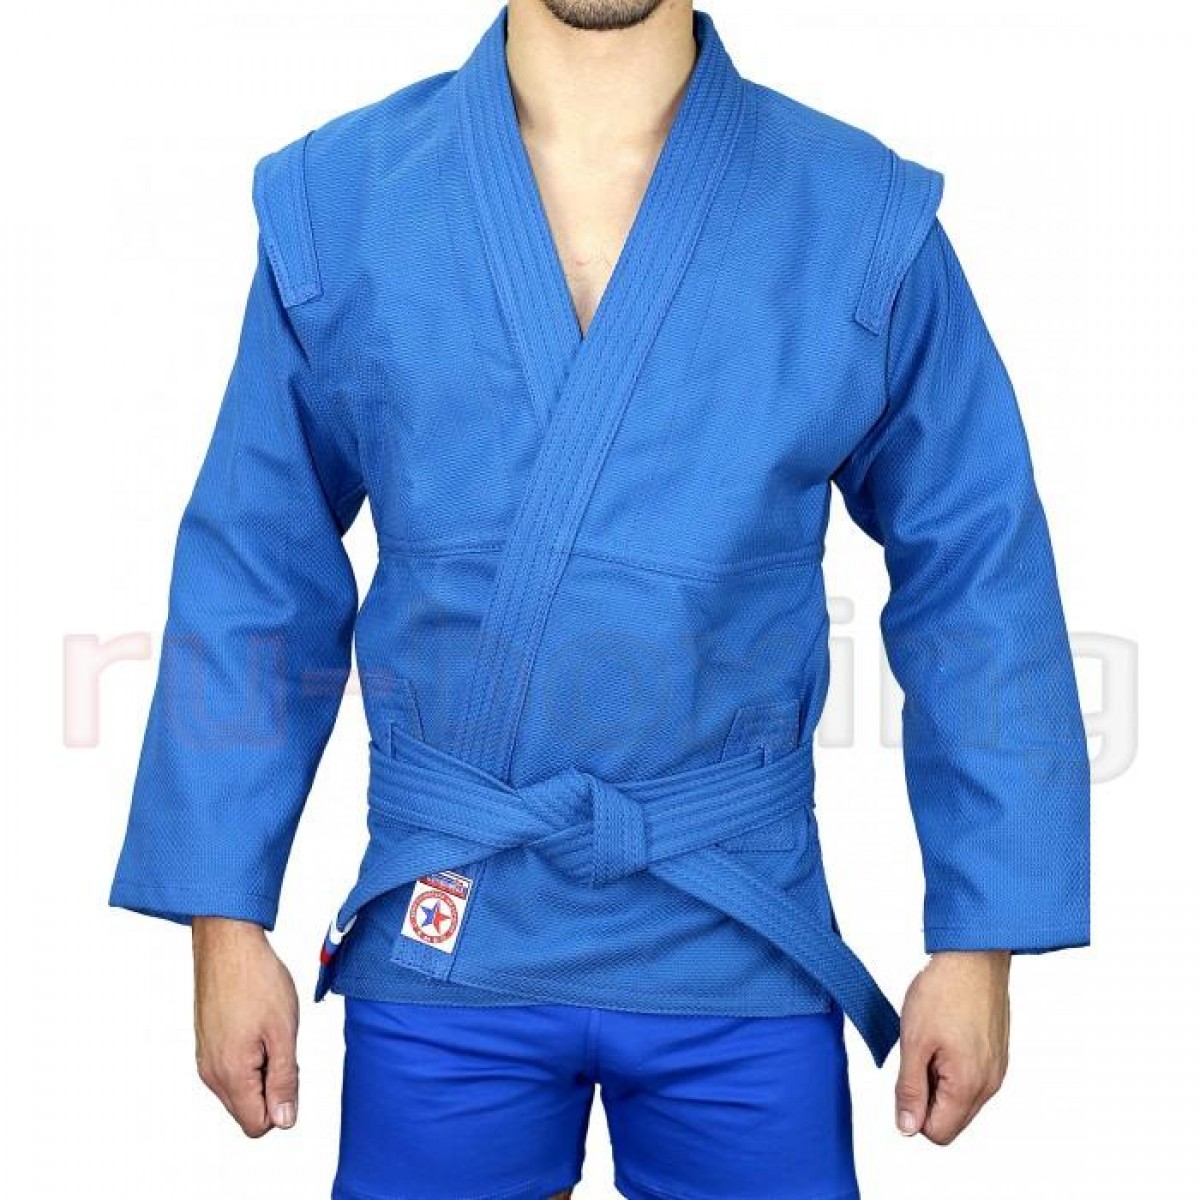 Куртка для самбо Атака размер 42 синяя